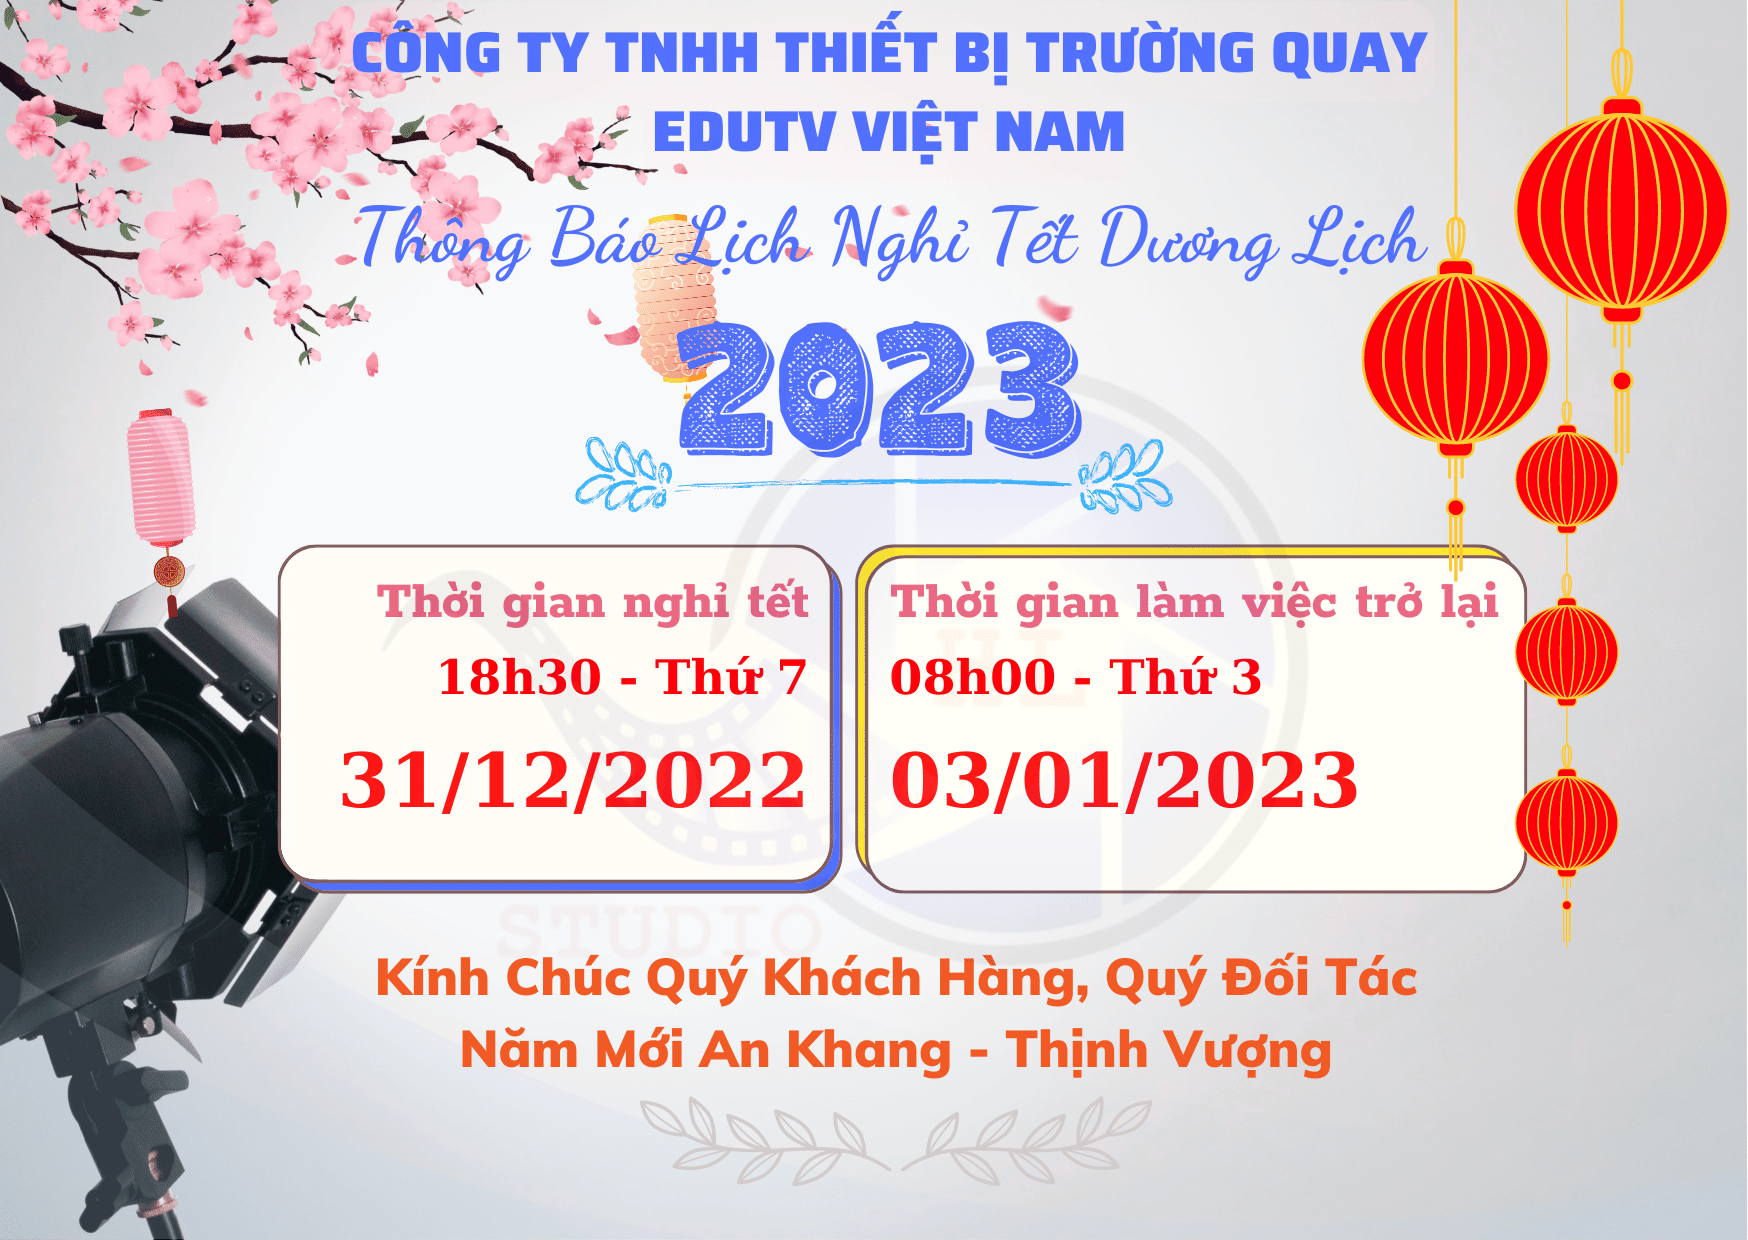 Nghi Tet Duong Lich 2023 Hlstudio